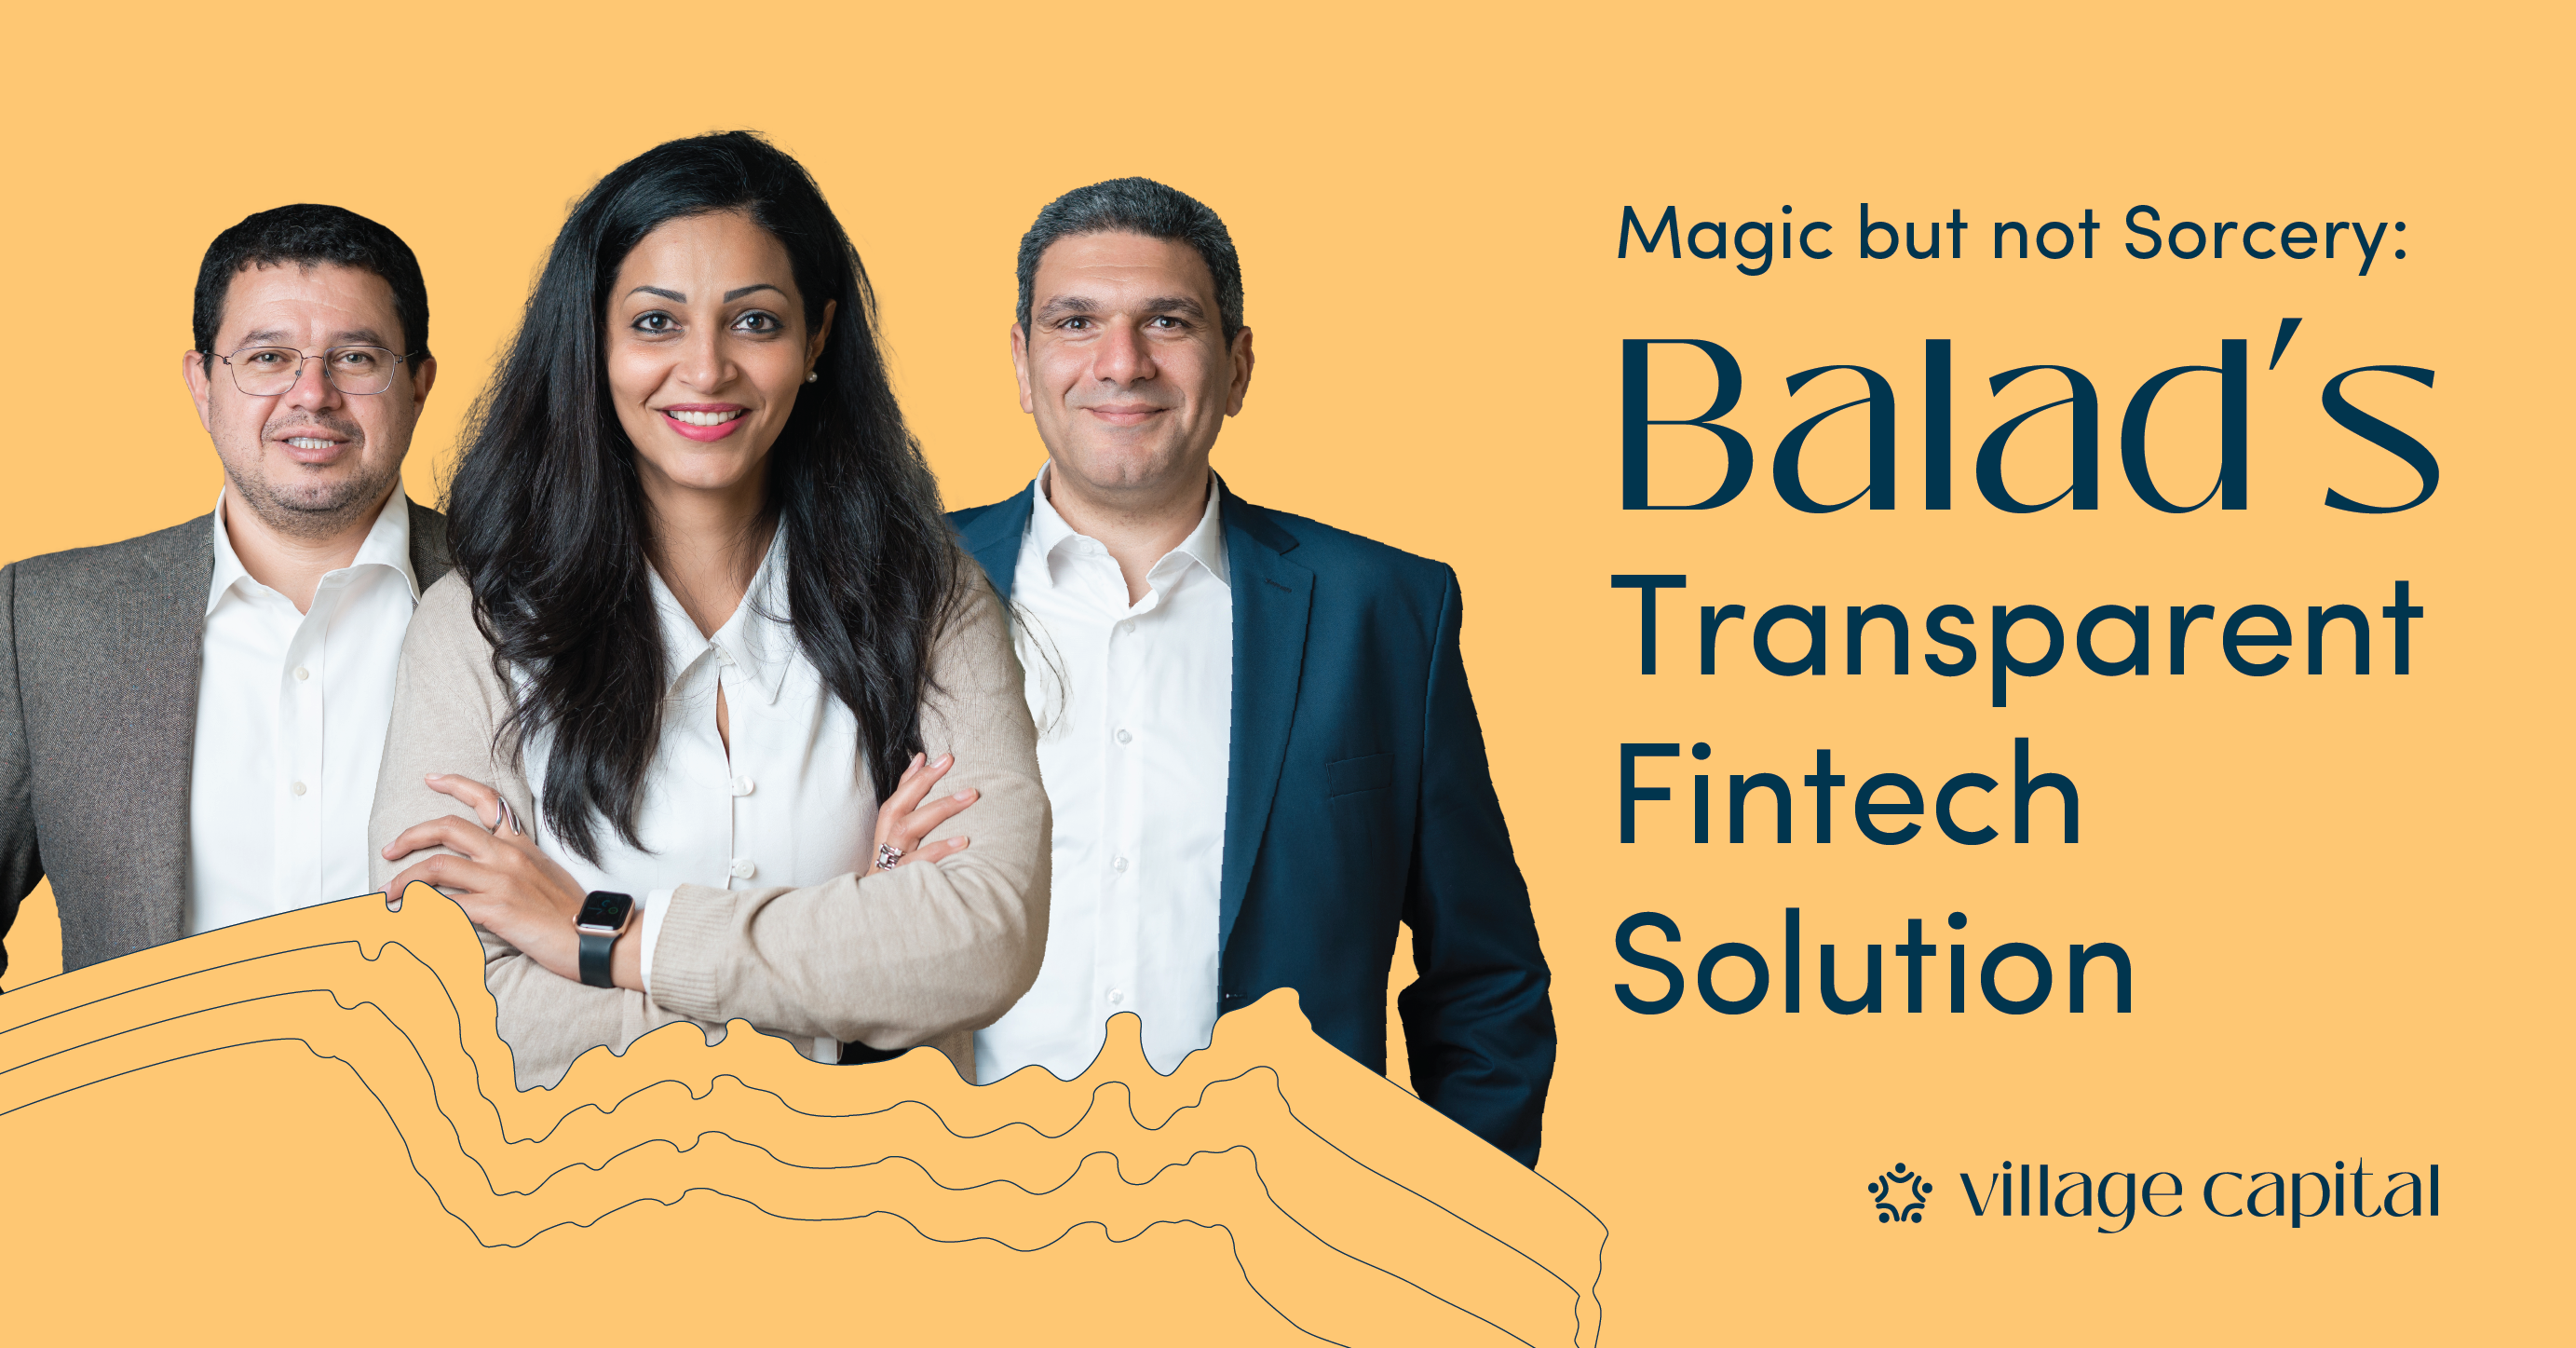 Blog_Balad_Magic but not Sorcery Balad’s Transparent Fintech Solution (2)